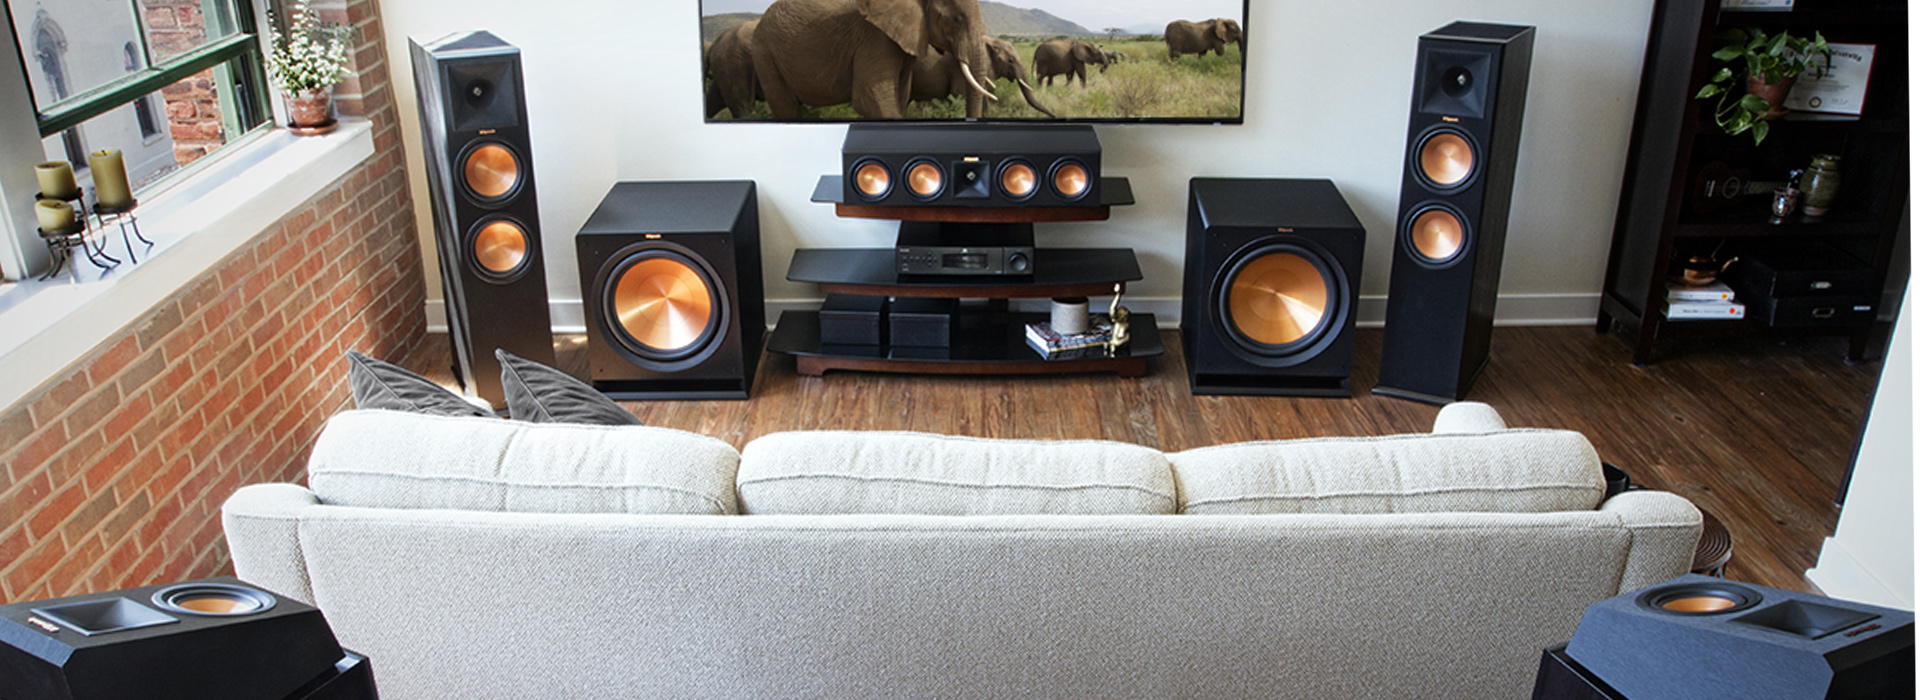 surround sound living room design